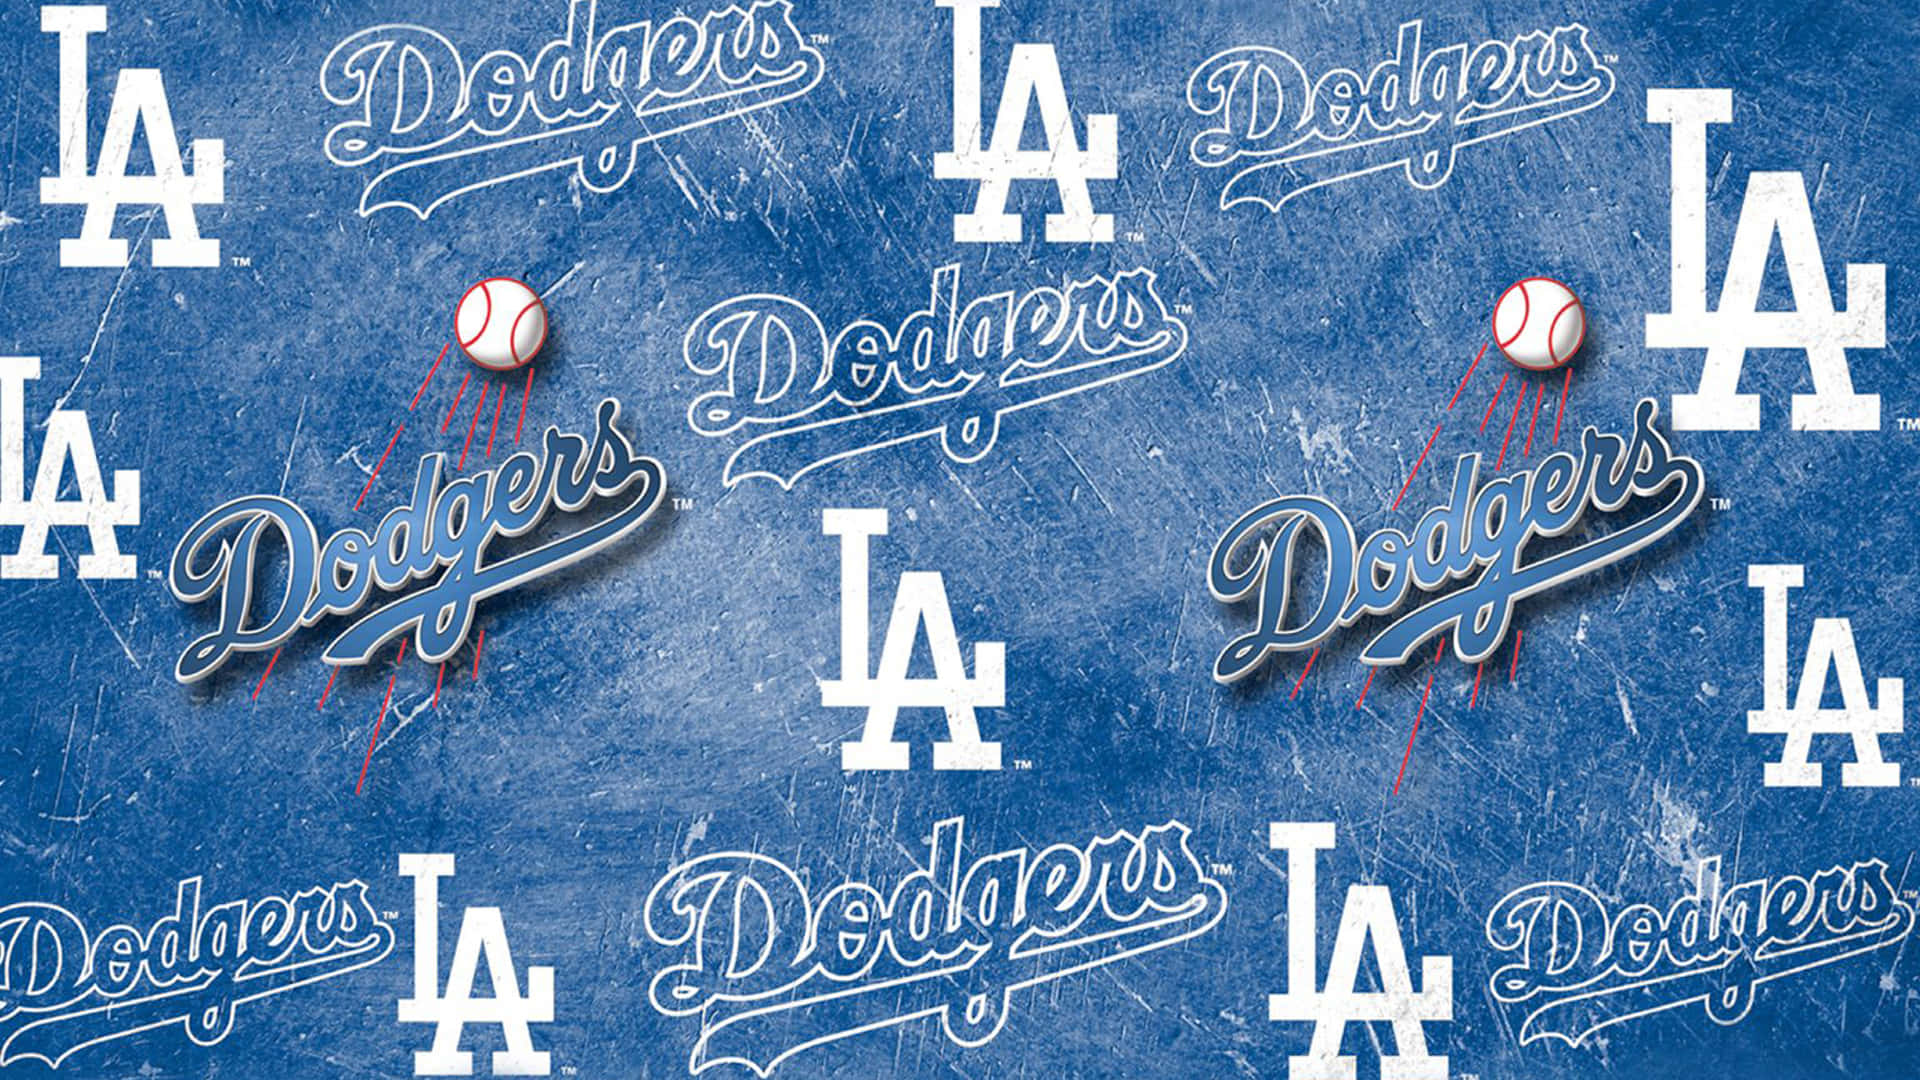 Los Angeles Dodgers Wallpaper  Dodgers, Los angeles dodgers logo, La  dodgers baseball